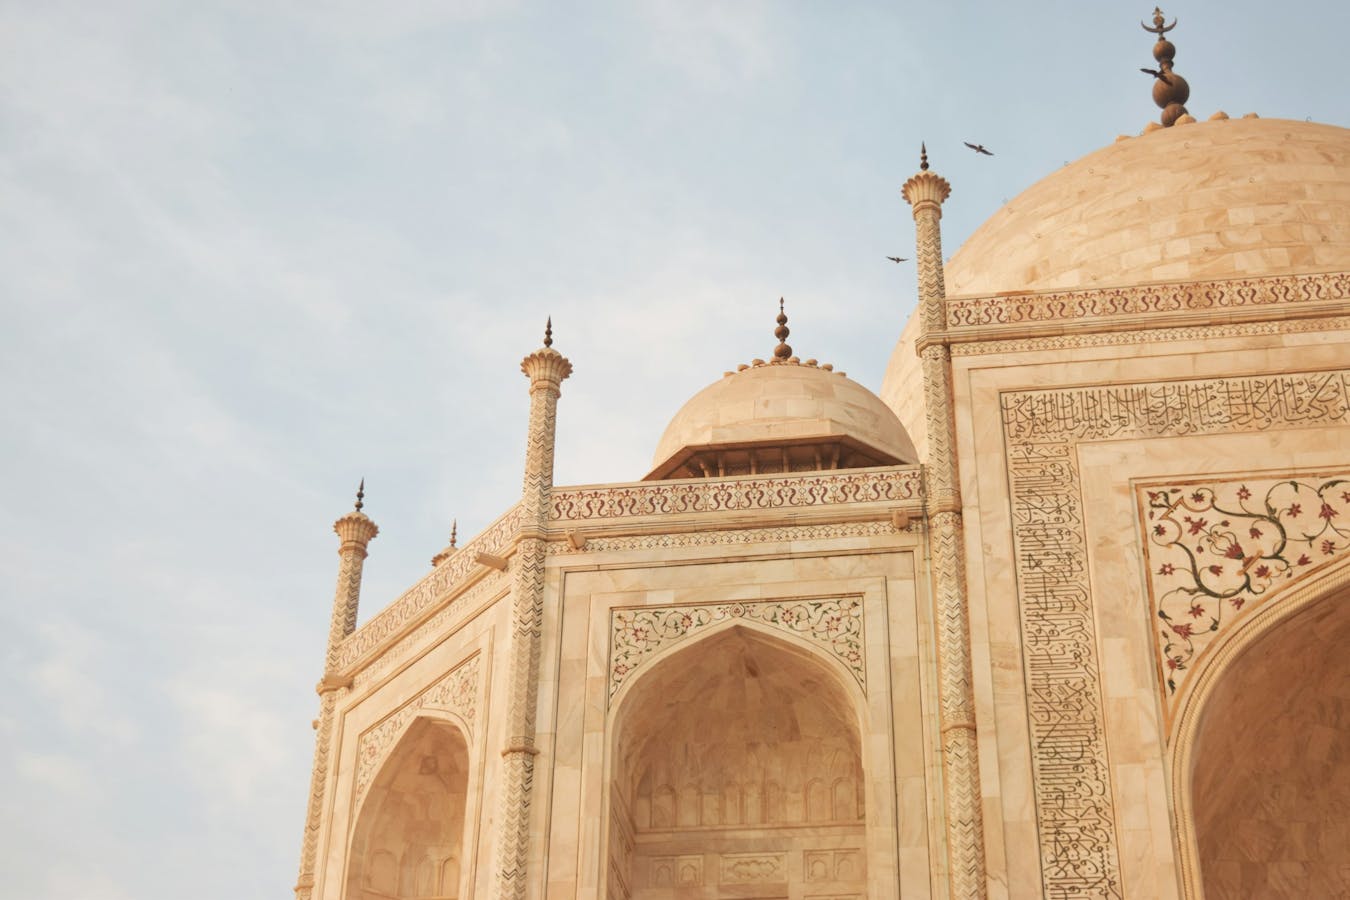 Close up of Taj Mahal, Agra, India